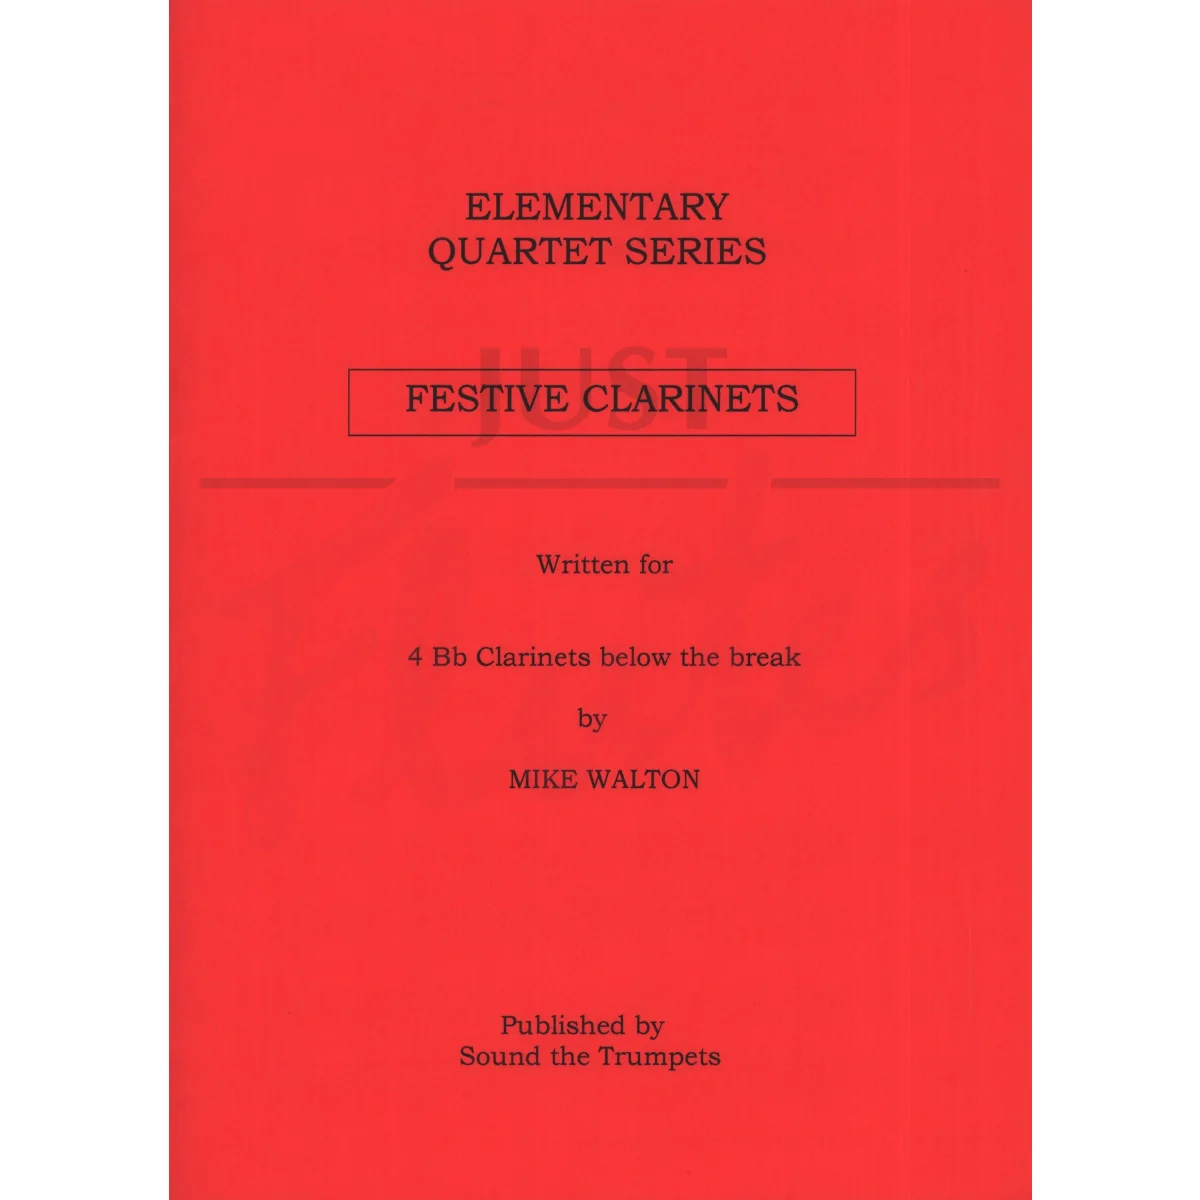 Festive Clarinets For Clarinet Quartet